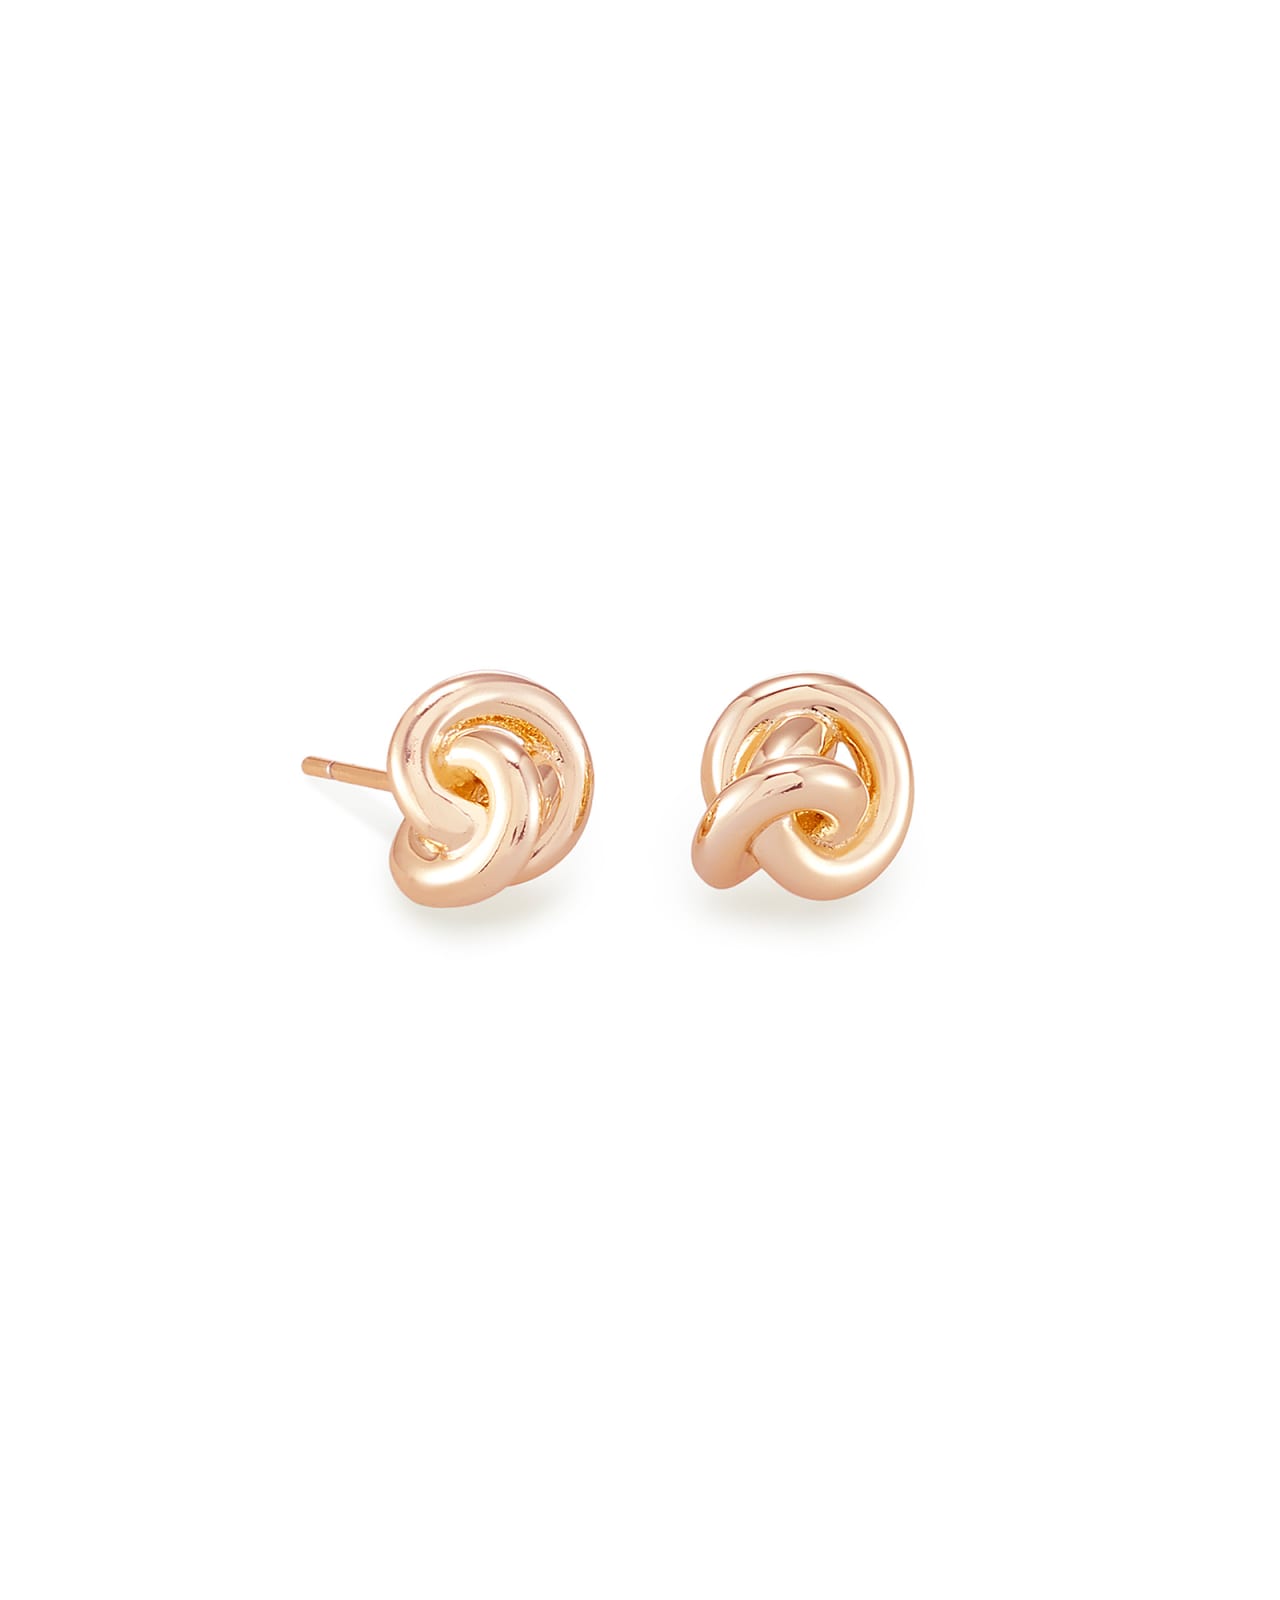 Presleigh Love Knot Stud Earrings in Rose Gold | Kendra Scott